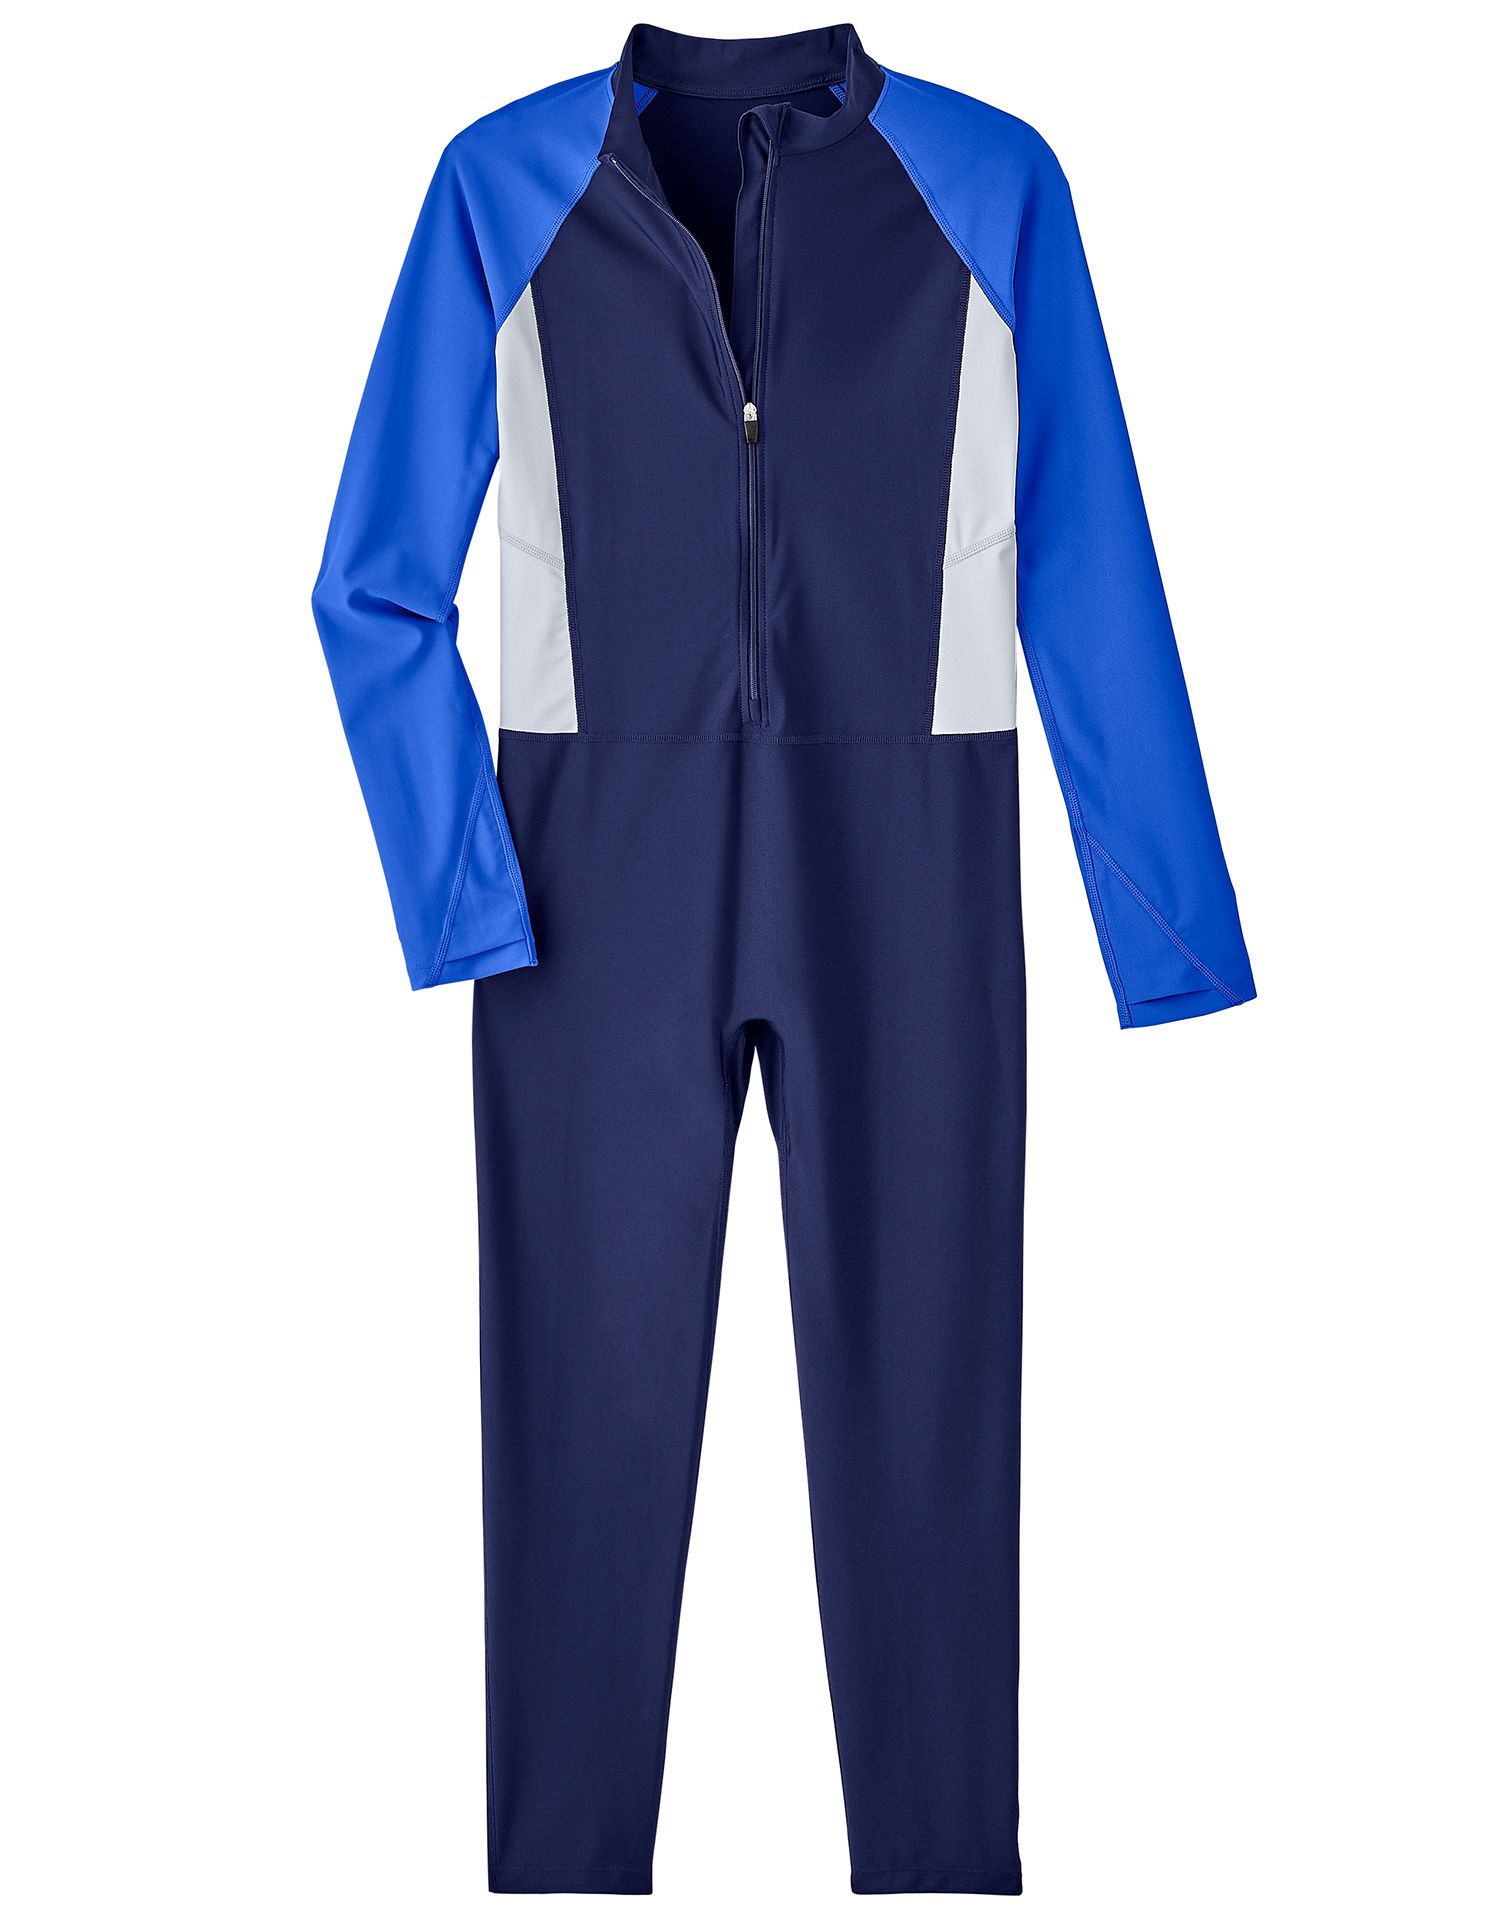 Coolibar - UV Swim suit for kids - Sunray 360 Coverage - Navy